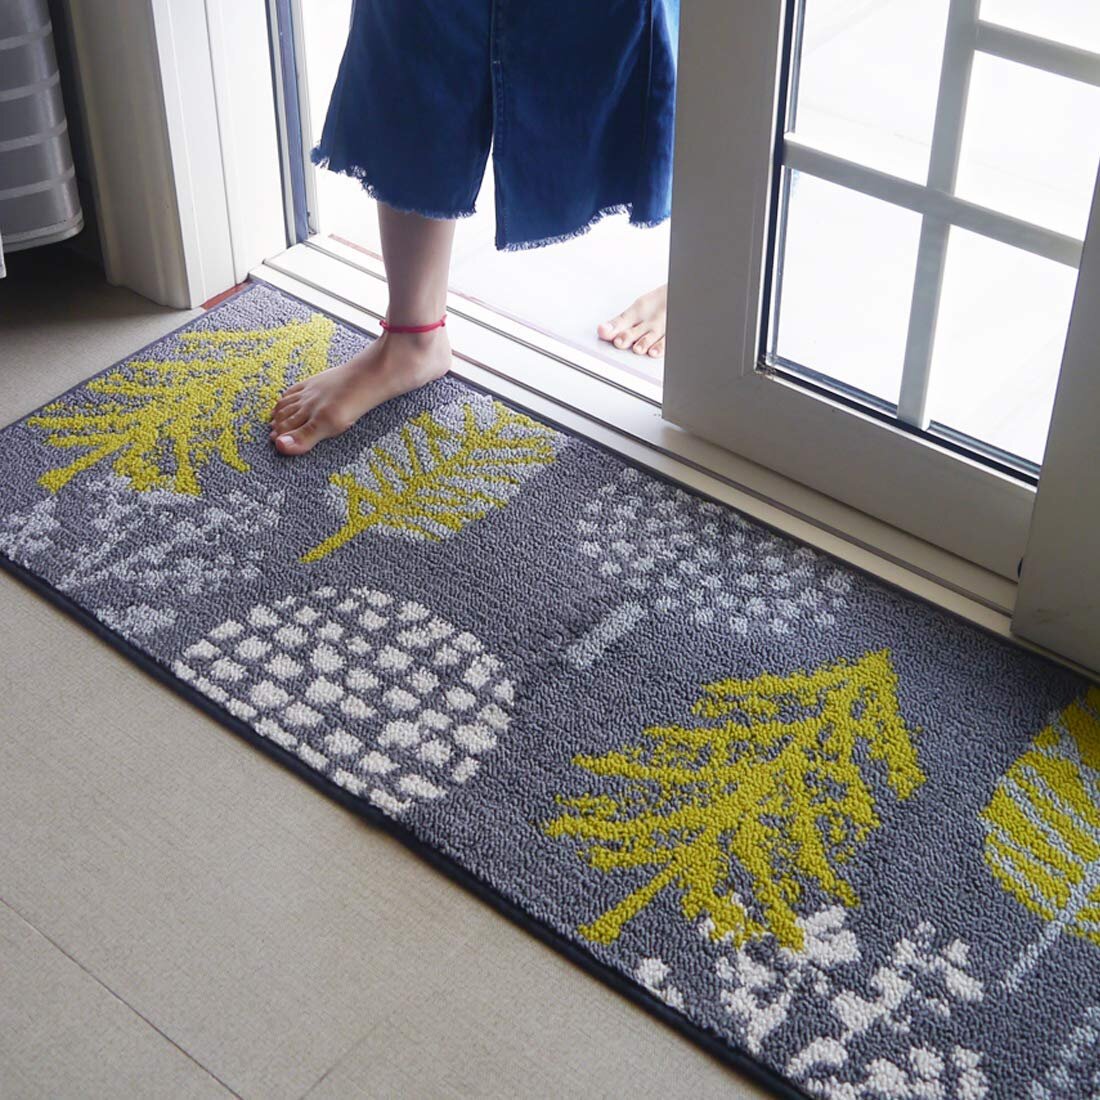 Teal Mandala Wooden Board Pattern with Life Quotes 30x18 FAMILYDECOR Doormat for Entrance Way Indoor/Bathroom/Front Door Area Floor Mat Rugs Rubber Non Slip Absorb Kitchen Runner Carpet 